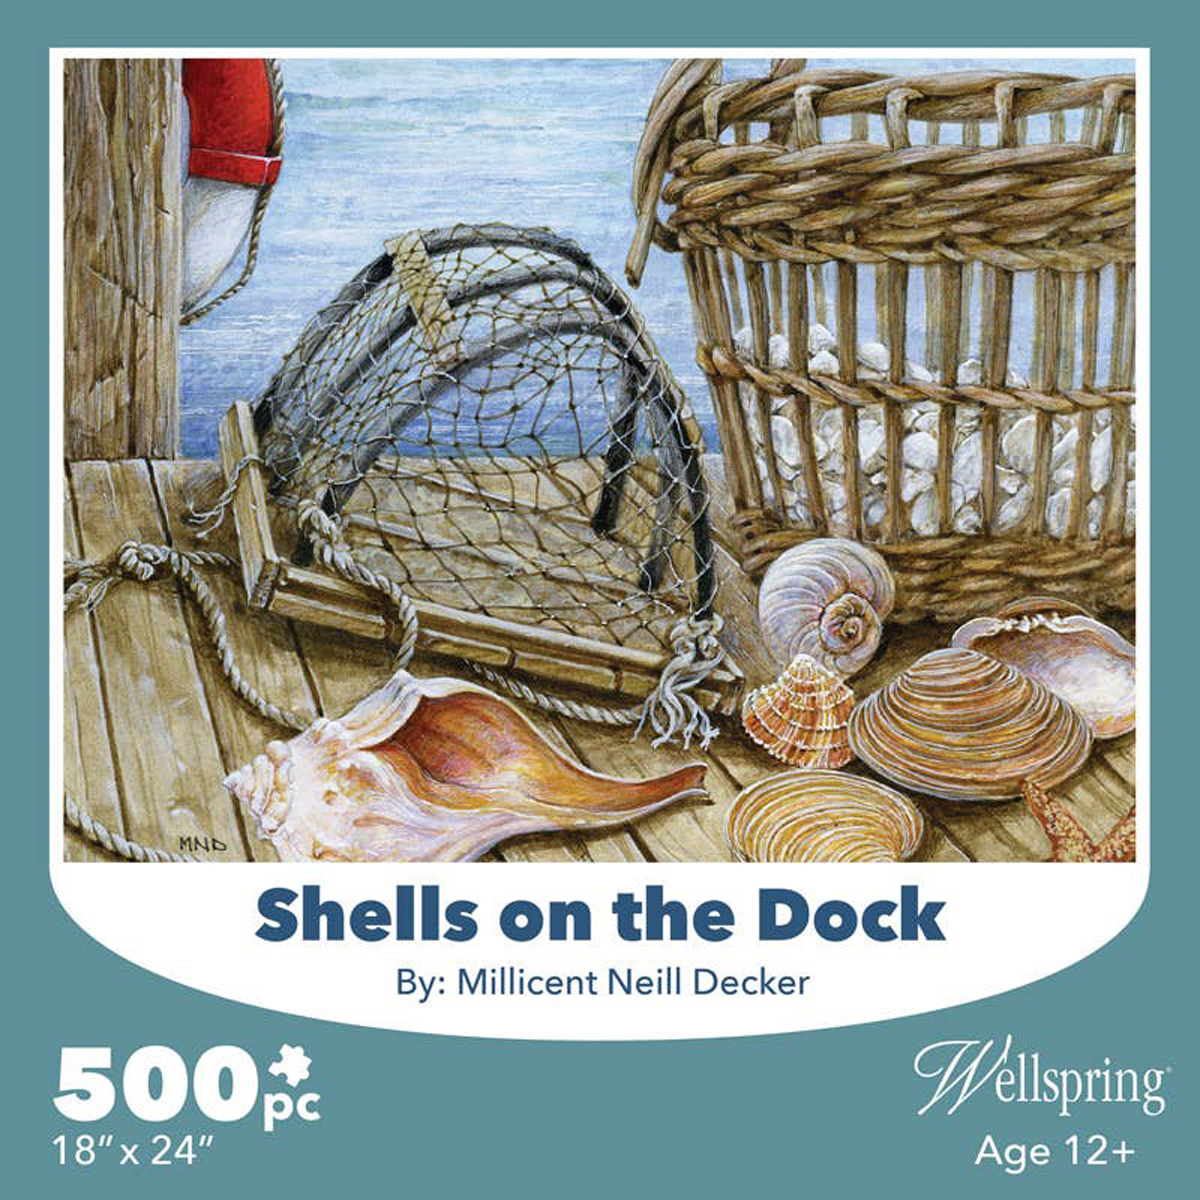 Shells on the Dock